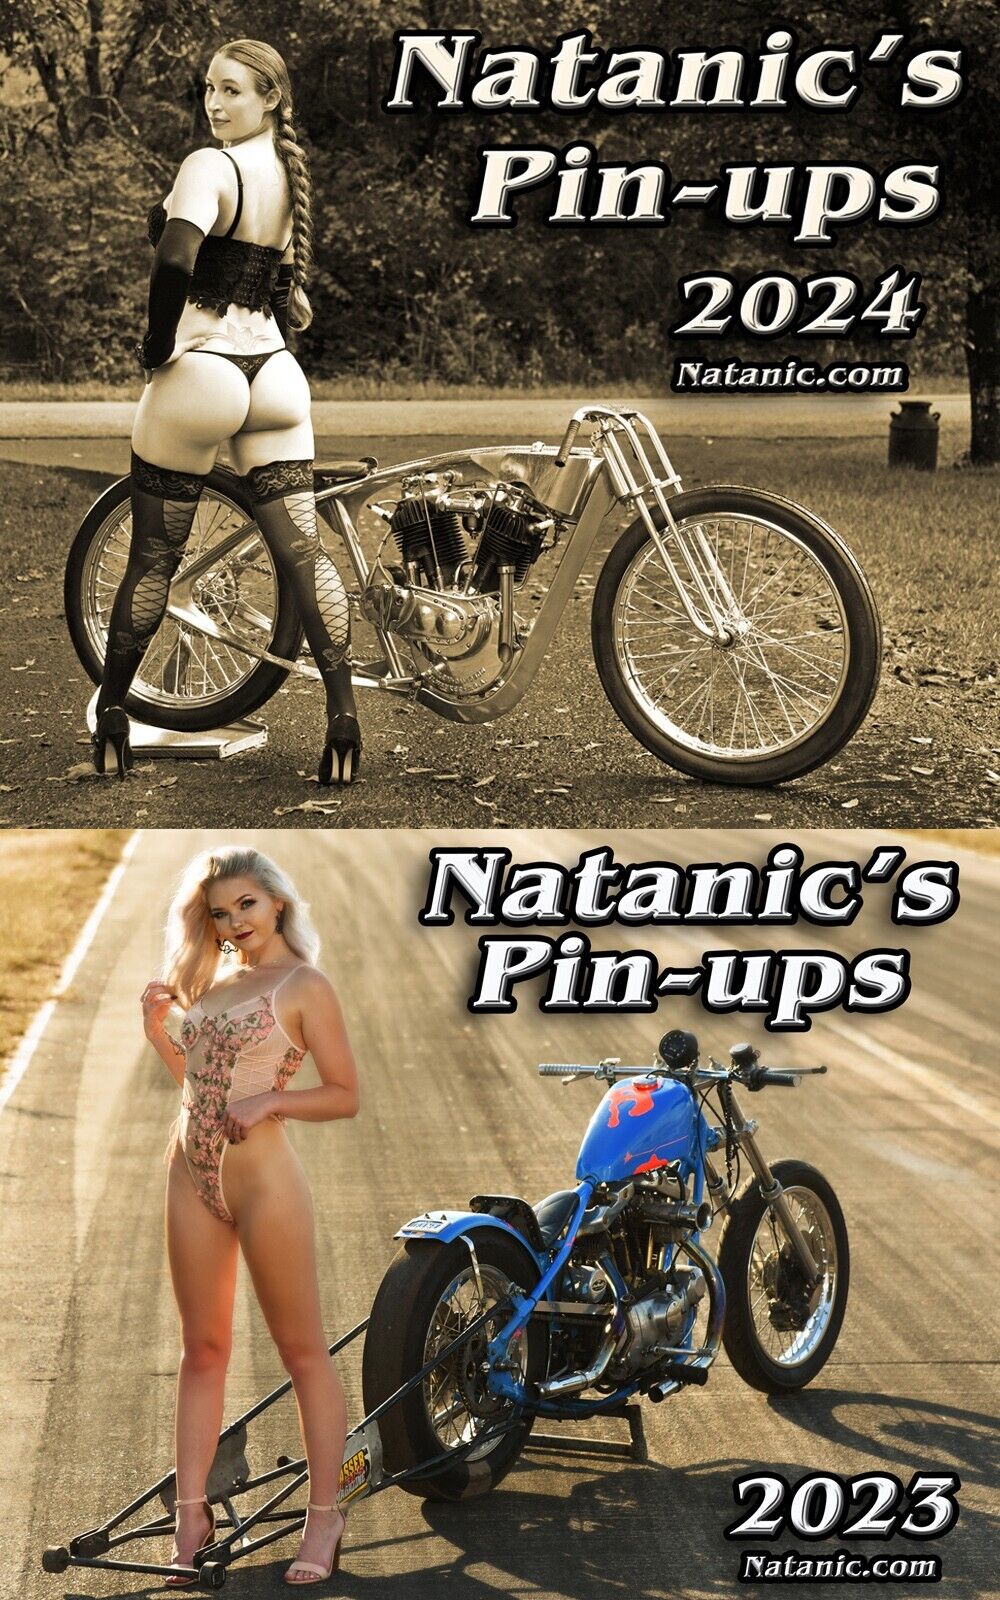 NATANIC'S Pin-ups 2023 & 2024 Biker Babe calendars - 2 calendar deal